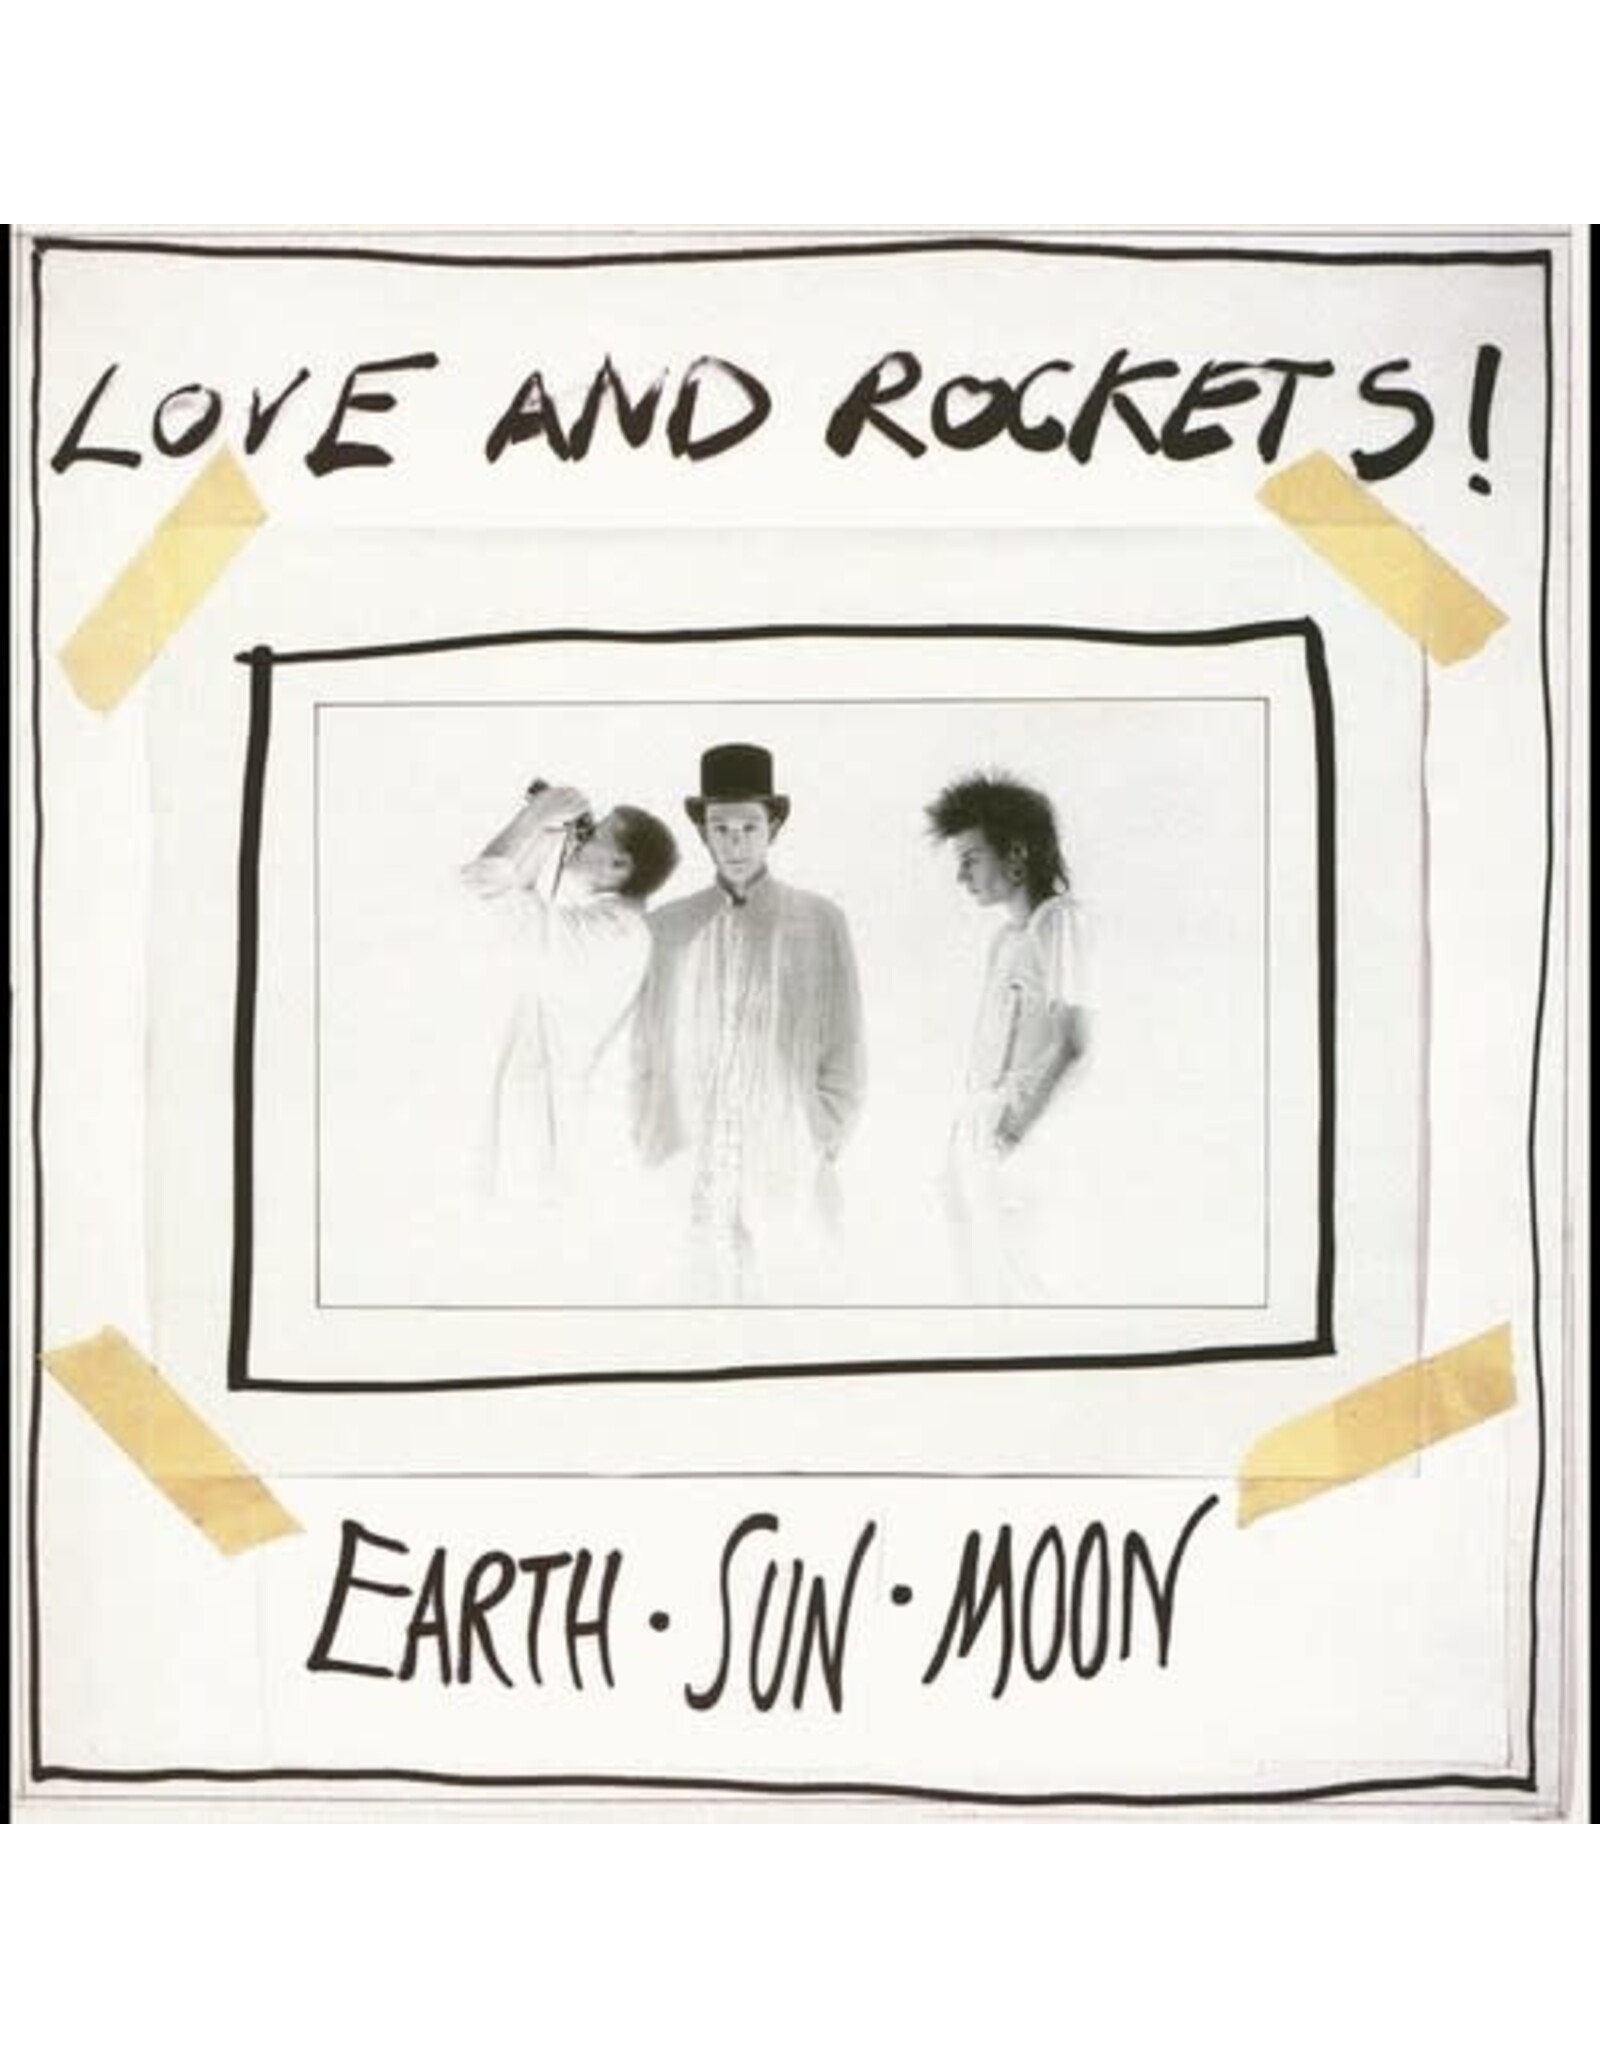 Love And Rockets - Earth Sun Moon LP